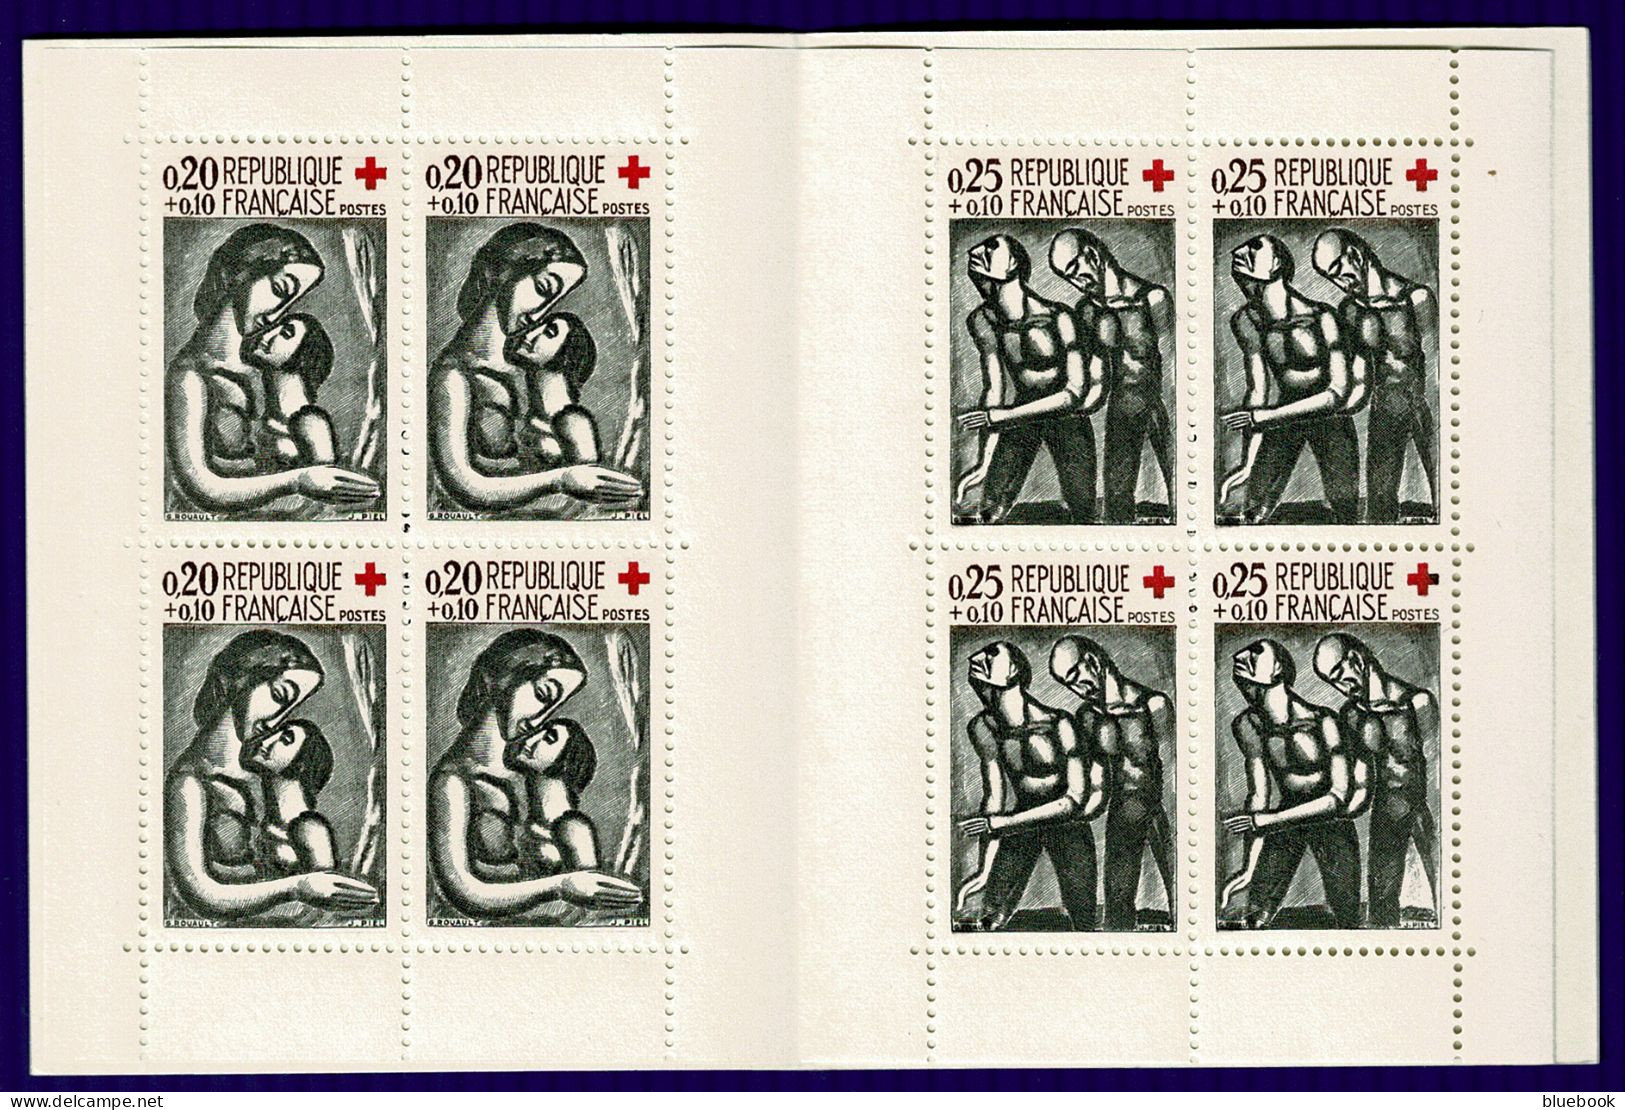 Ref 1645 - France 1961 - Red Cross Booklet SG 1555/1556 - Cruz Roja